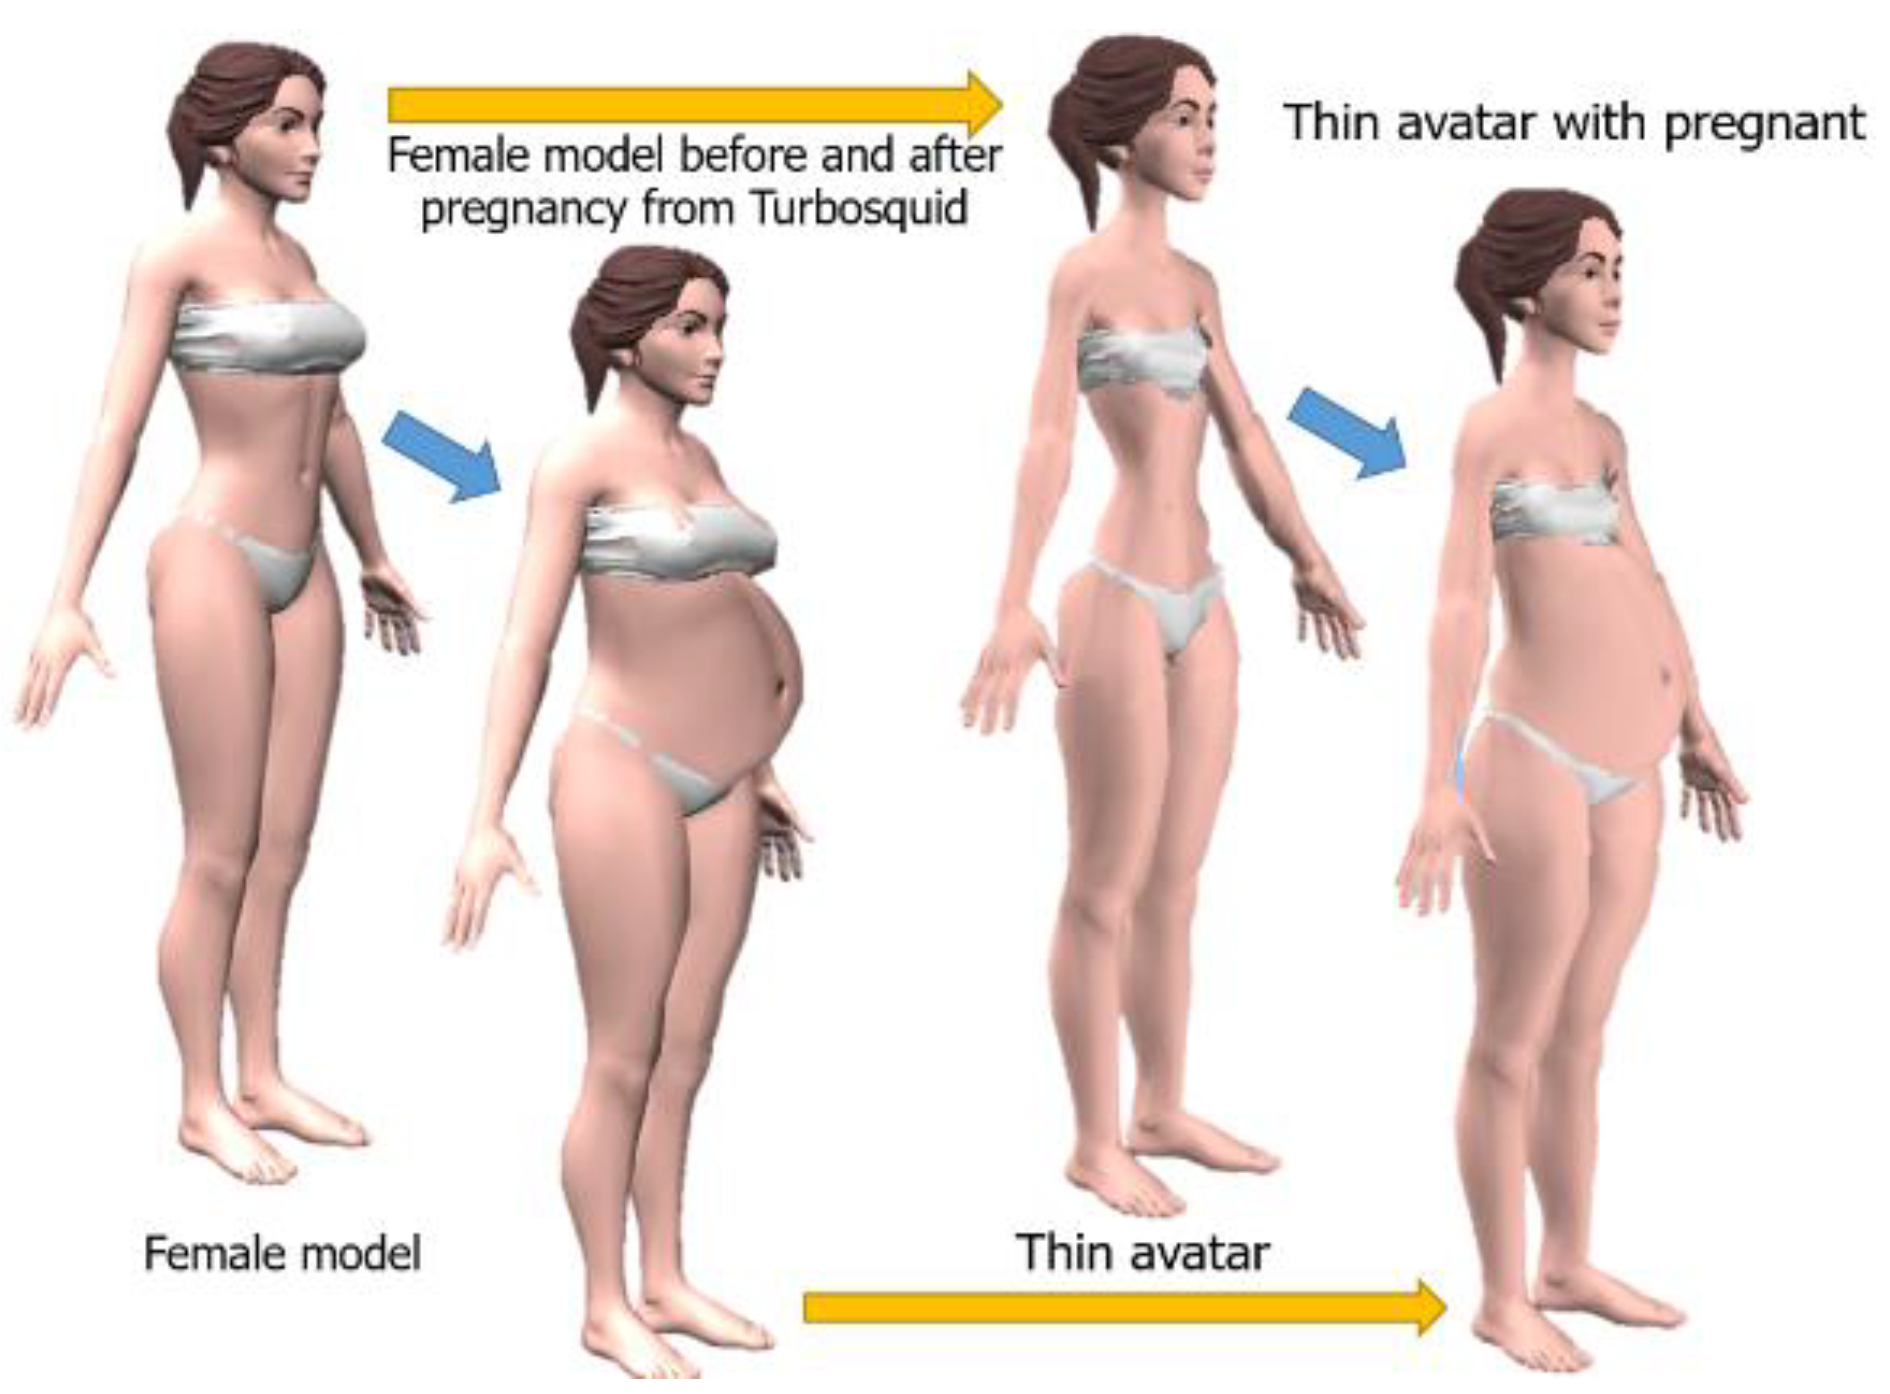 Female body visualizer metric